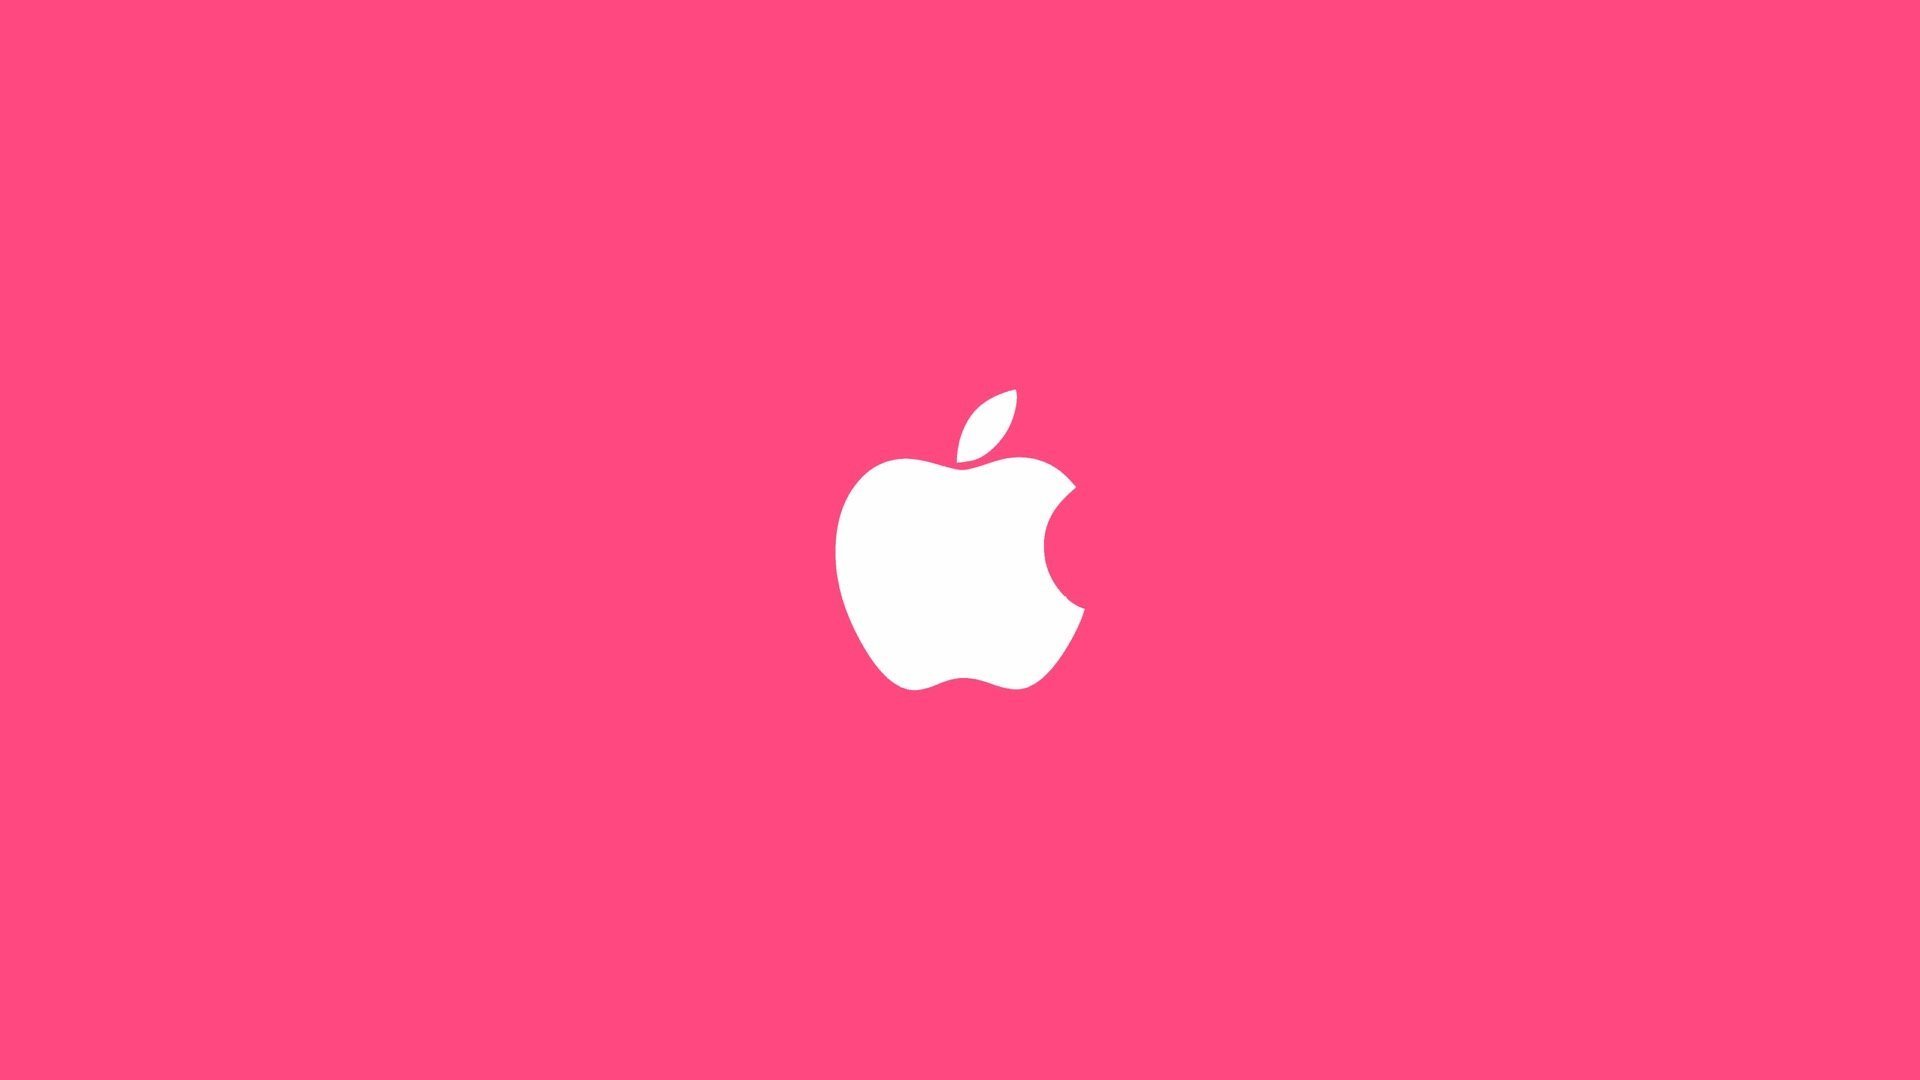 Ссылку на рабочий стол айфон. Обои на рабочий стол Apple. Значок айфона. Розовый фон Apple. Обои эпл айпад.